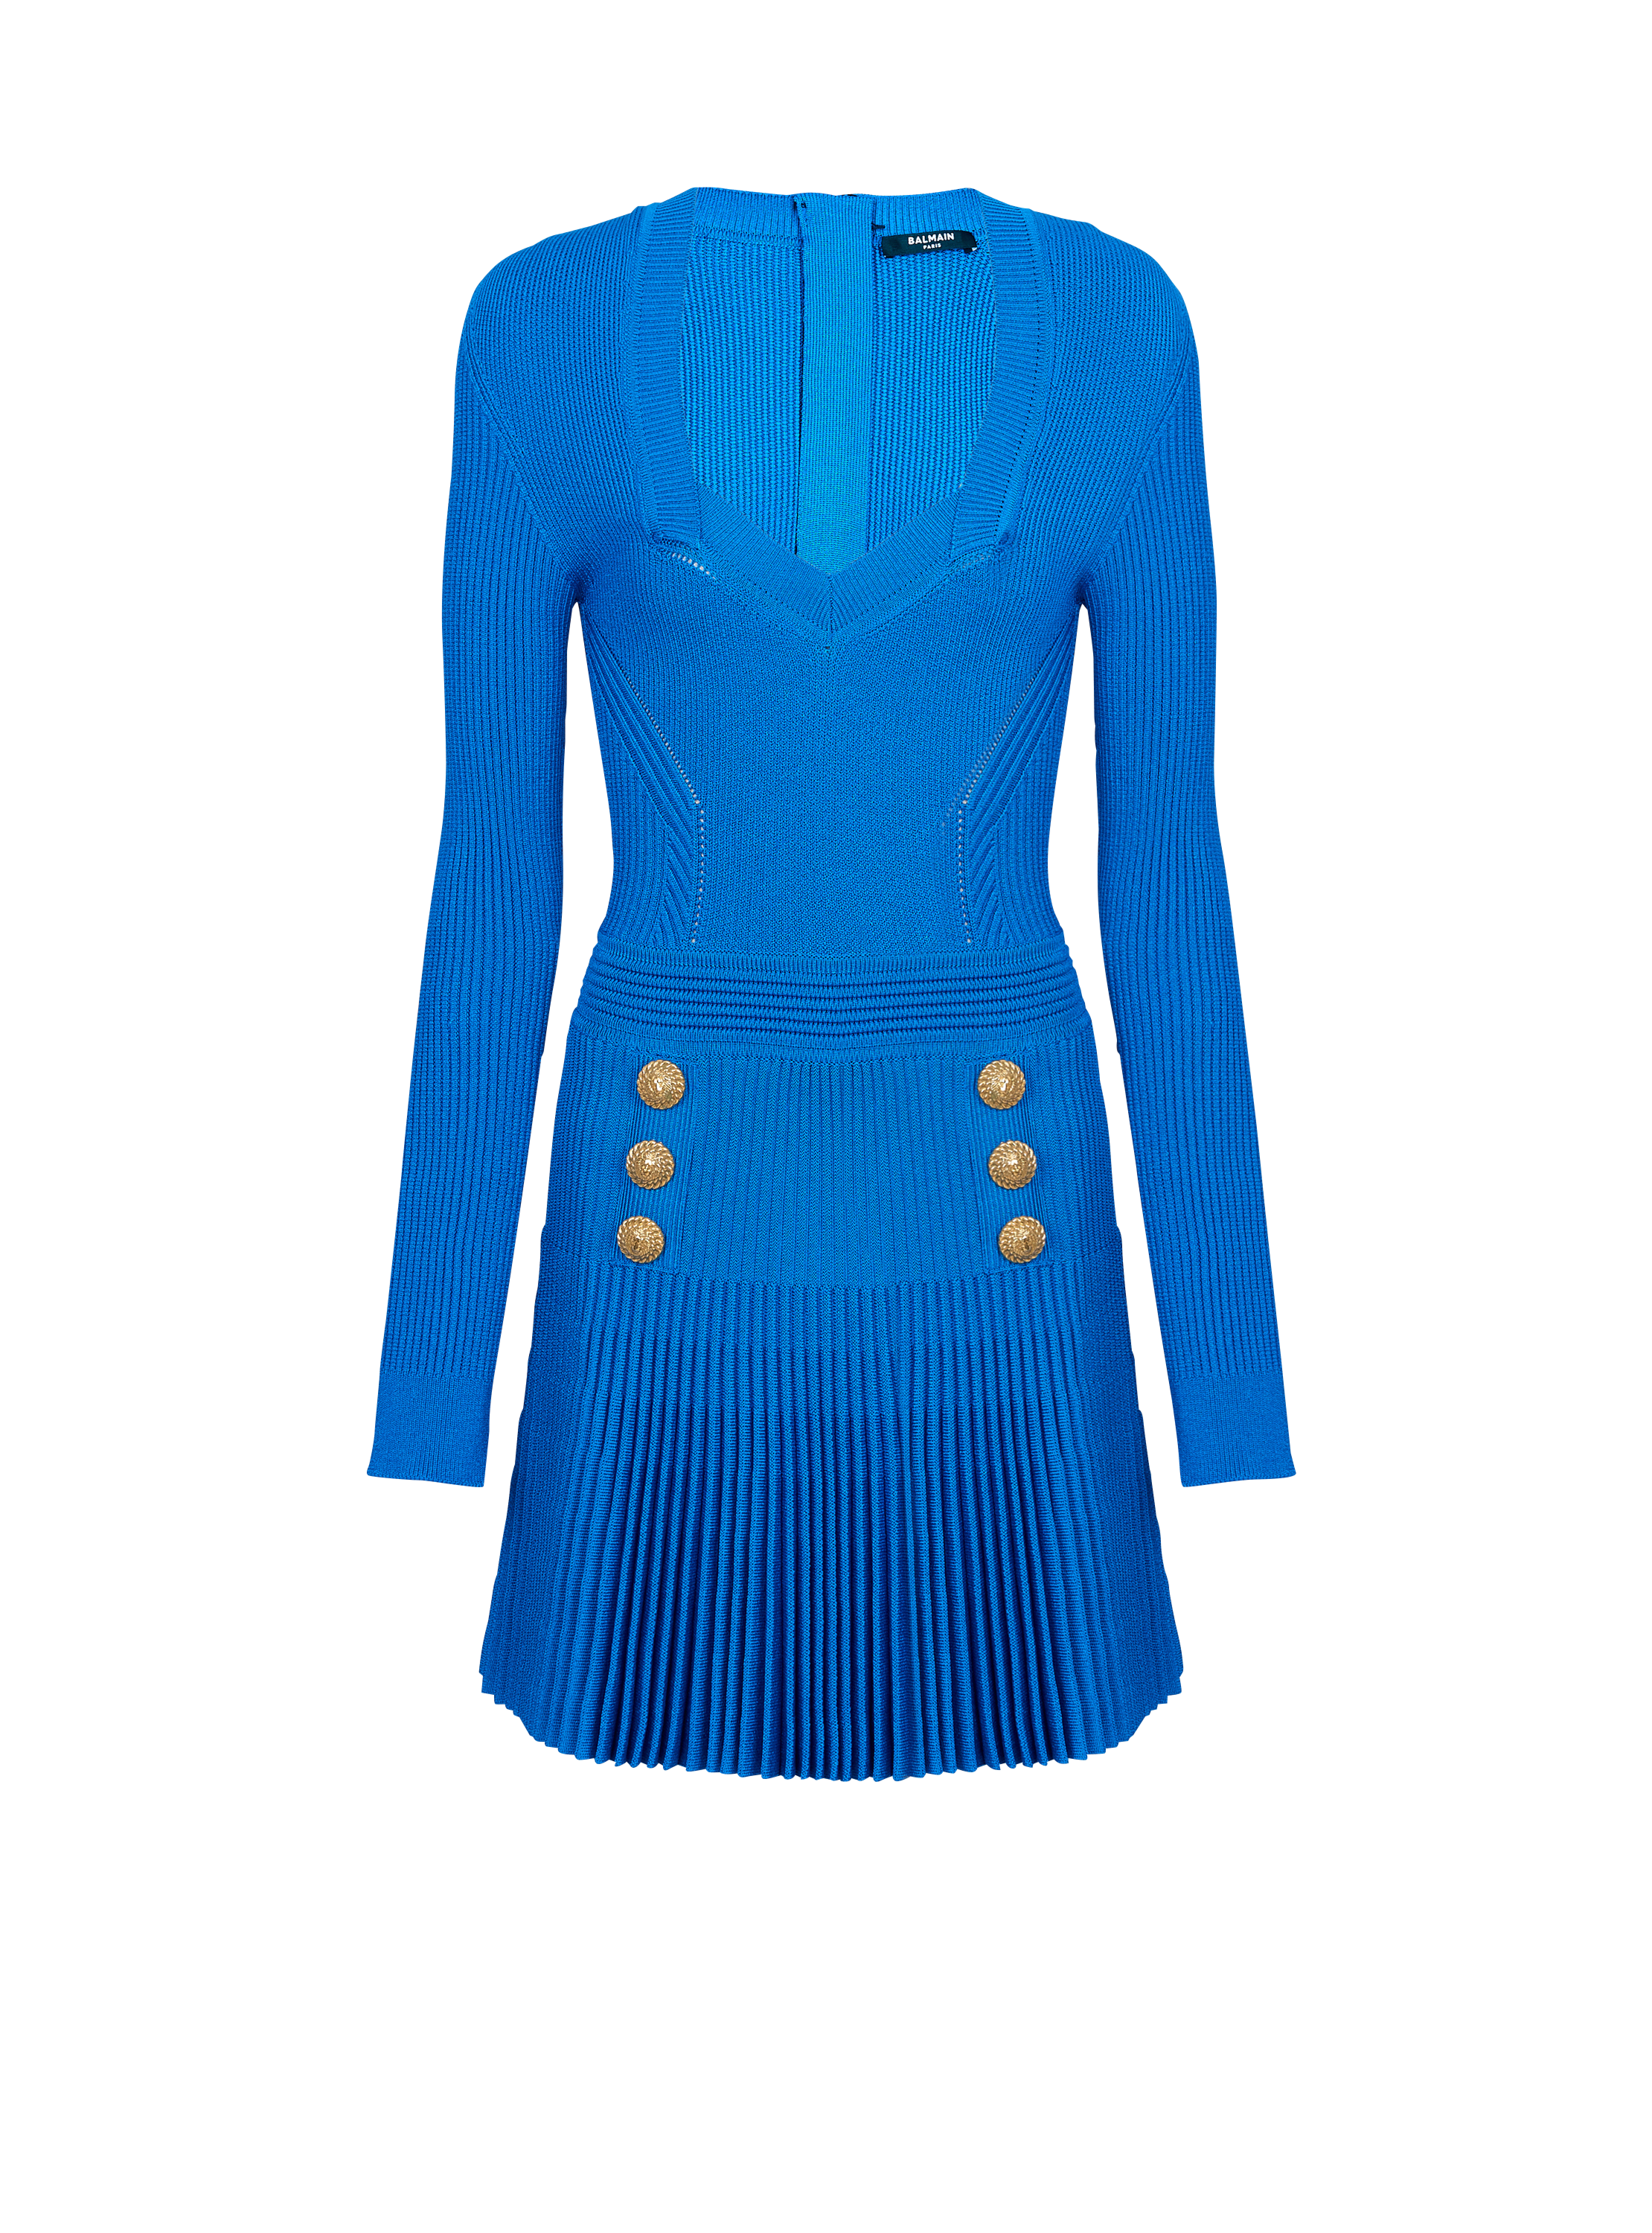 Short ribbed knit dress, blue, hi-res